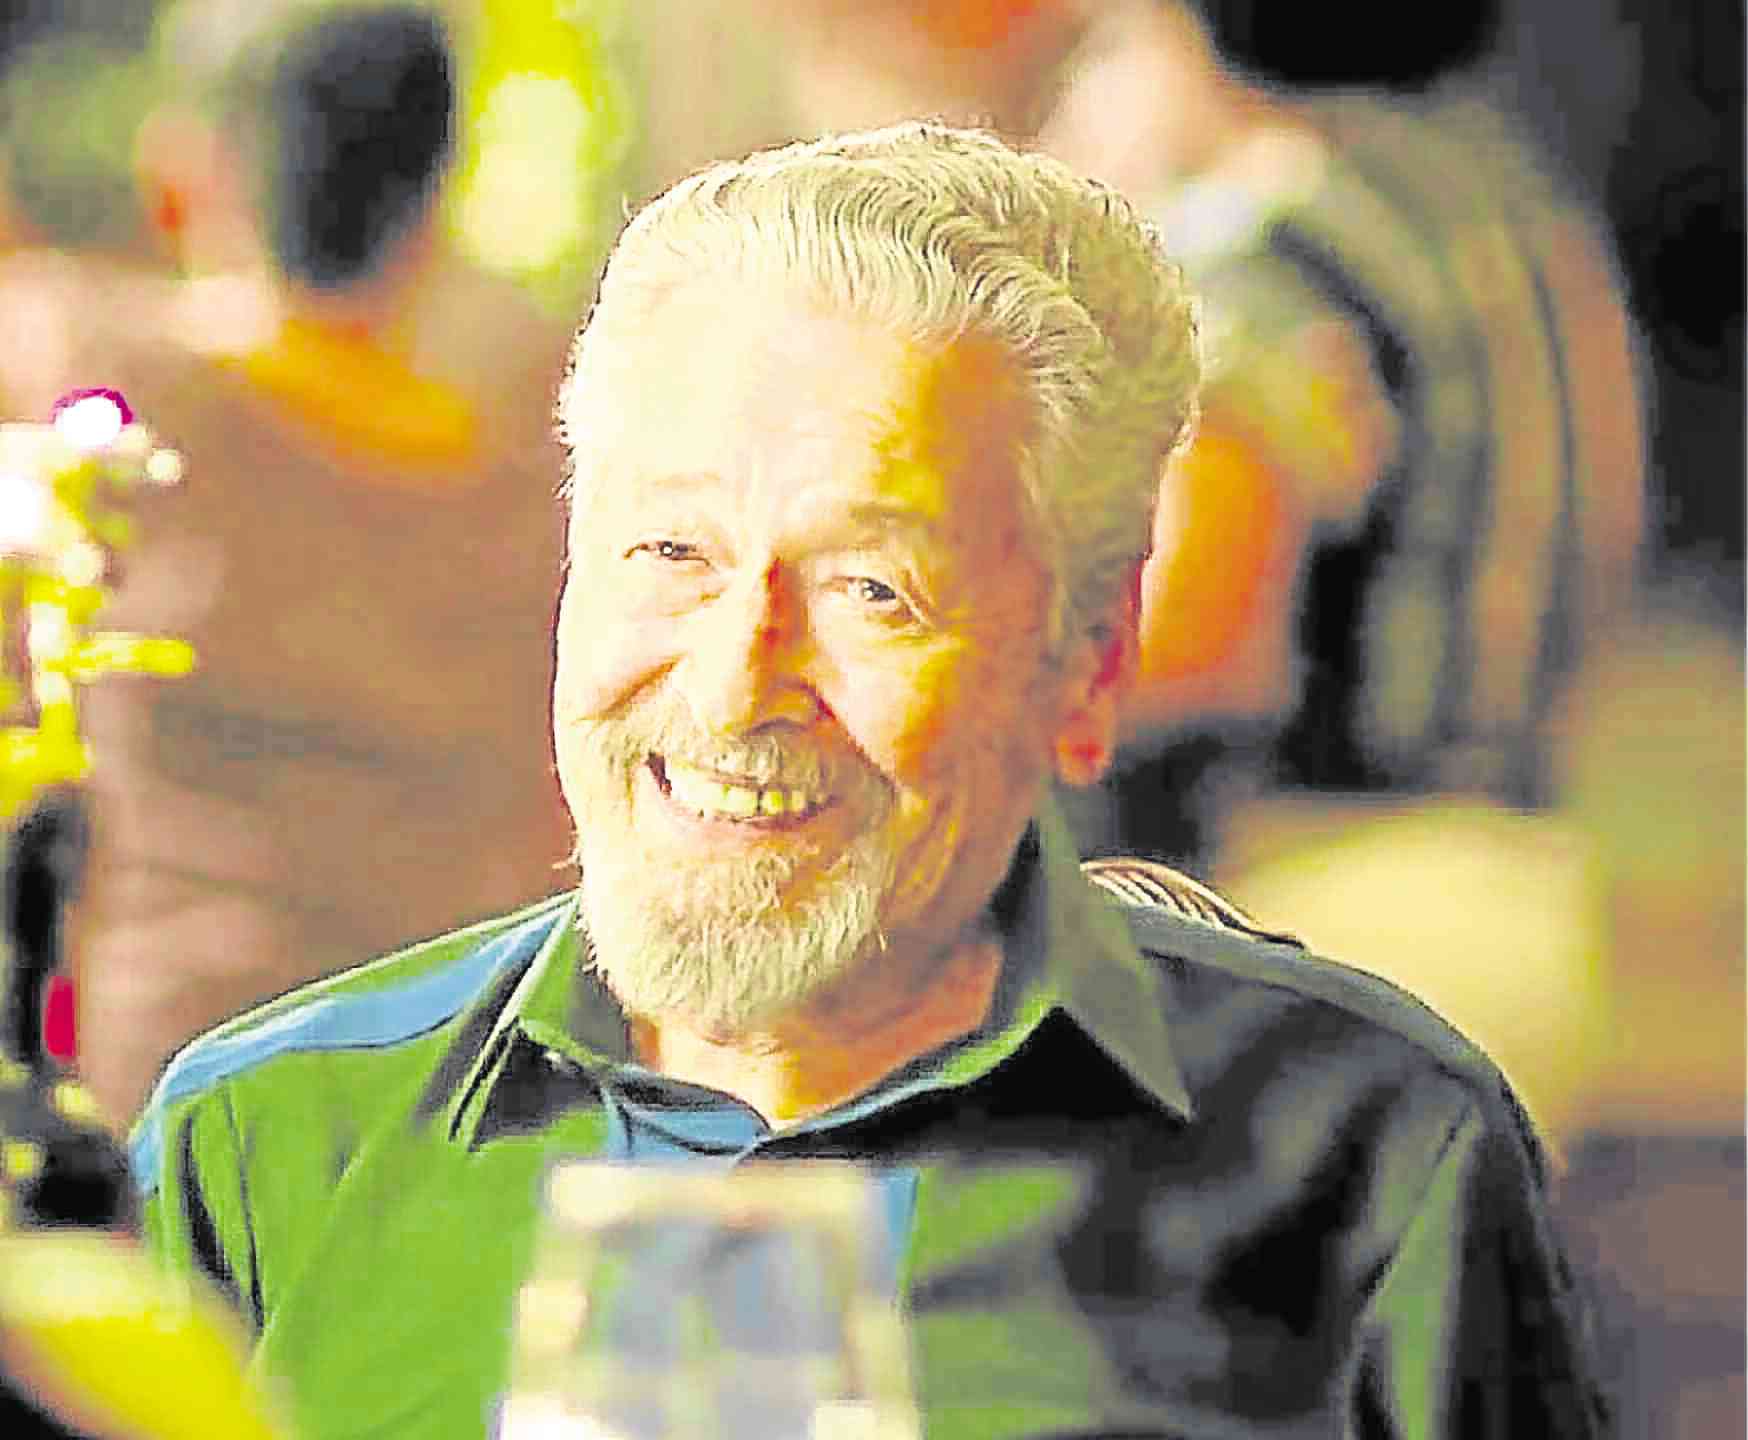 Palace mourns passing of screen legend Eddie Garcia